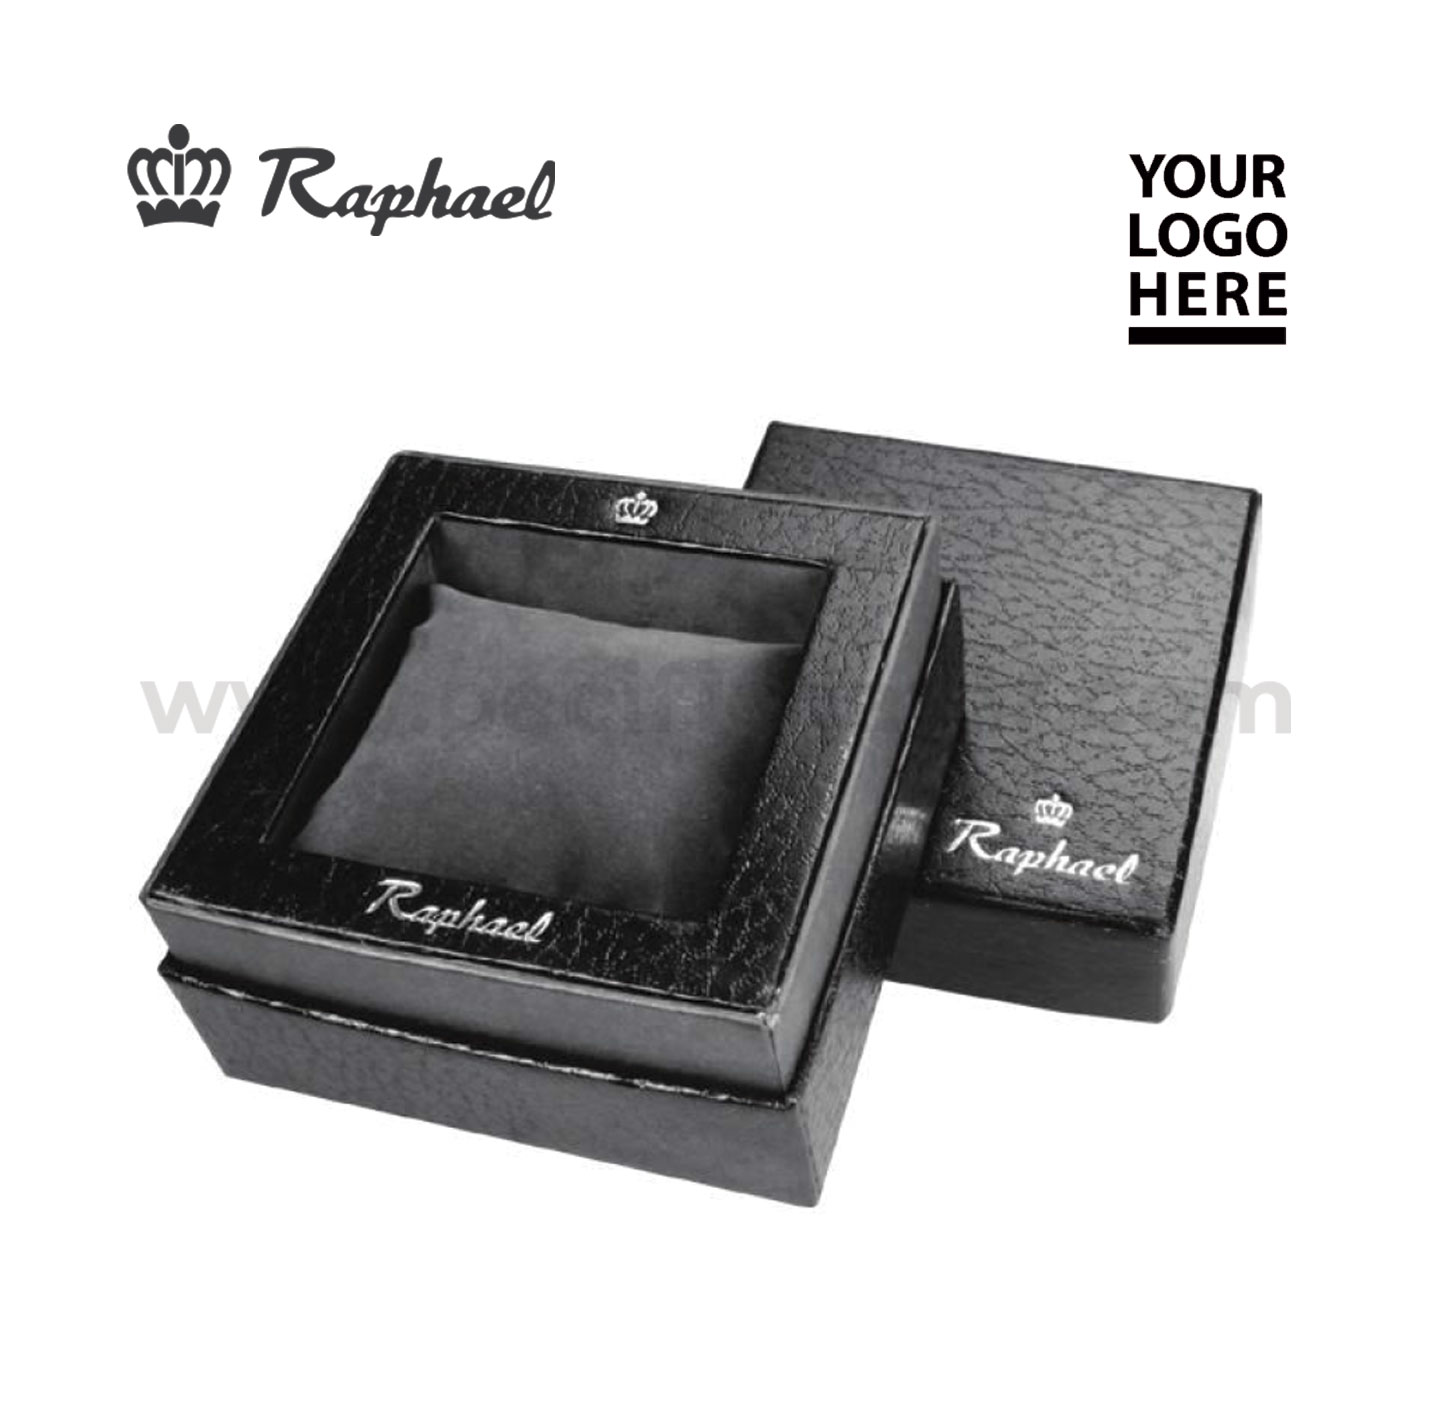 Raphael Watches Box